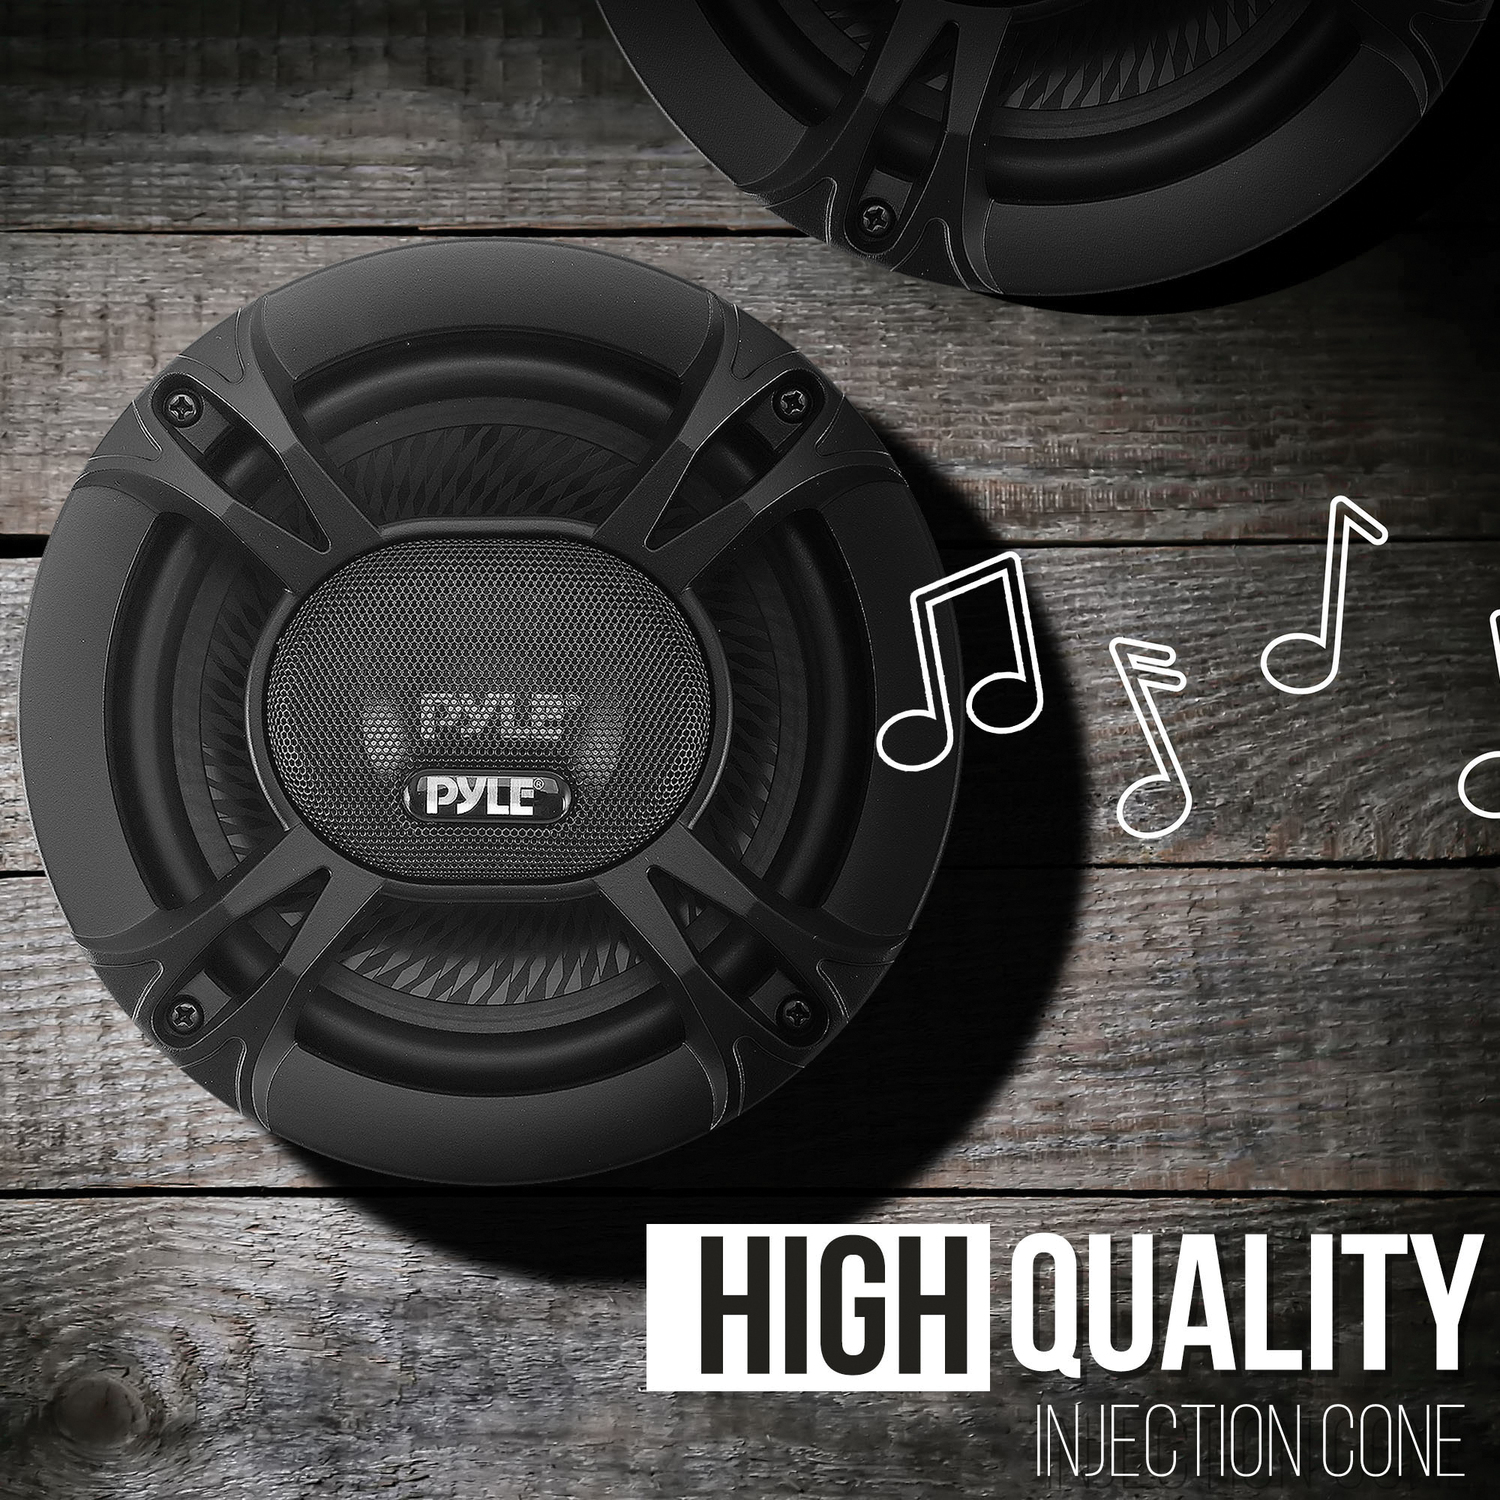 Pyle 2-Way Universal Car Stereo Speakers-120W 3.5 Inch Coaxial Loud Pro Audio Car Speaker (Black) - image 4 of 7